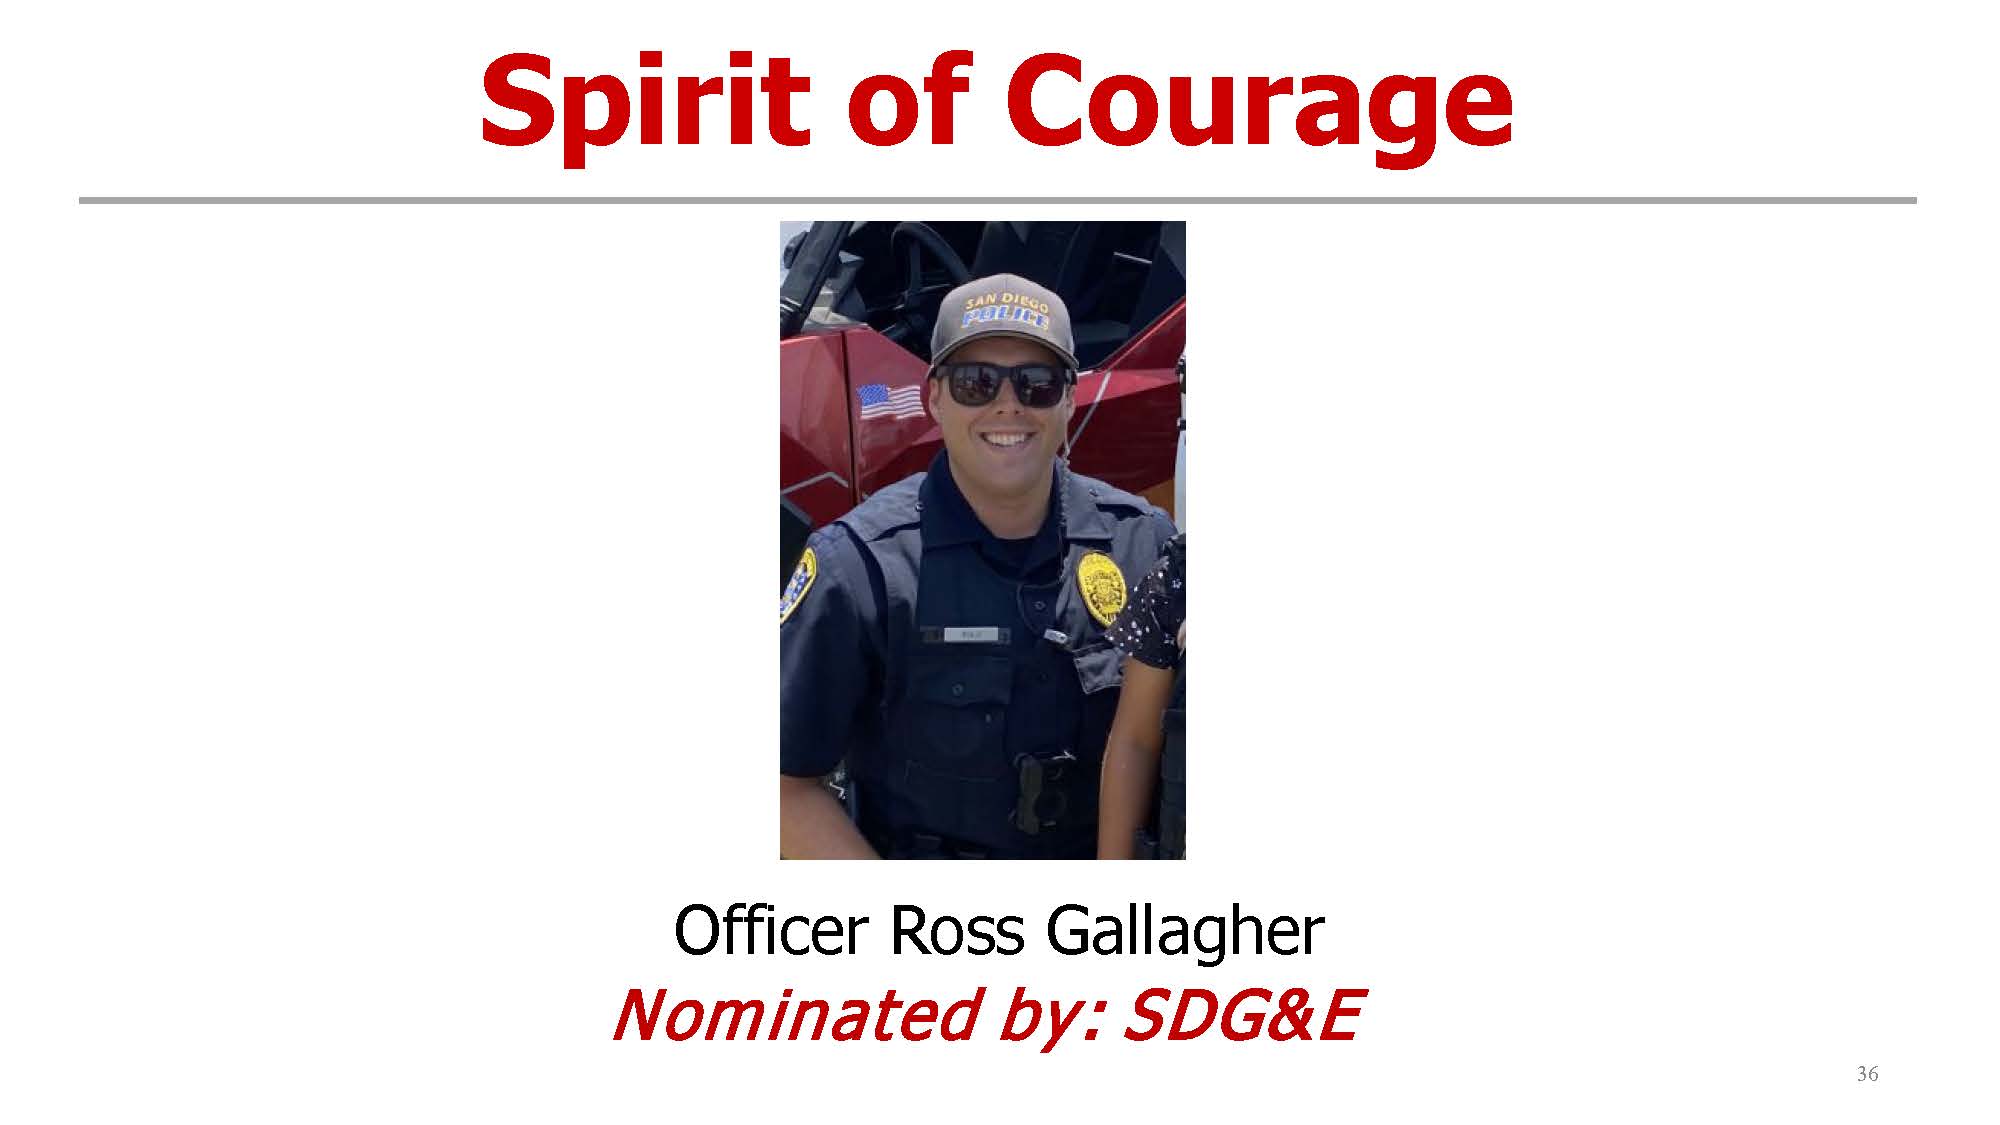 Spirit of Courage Award- Officer Ross Gallagher